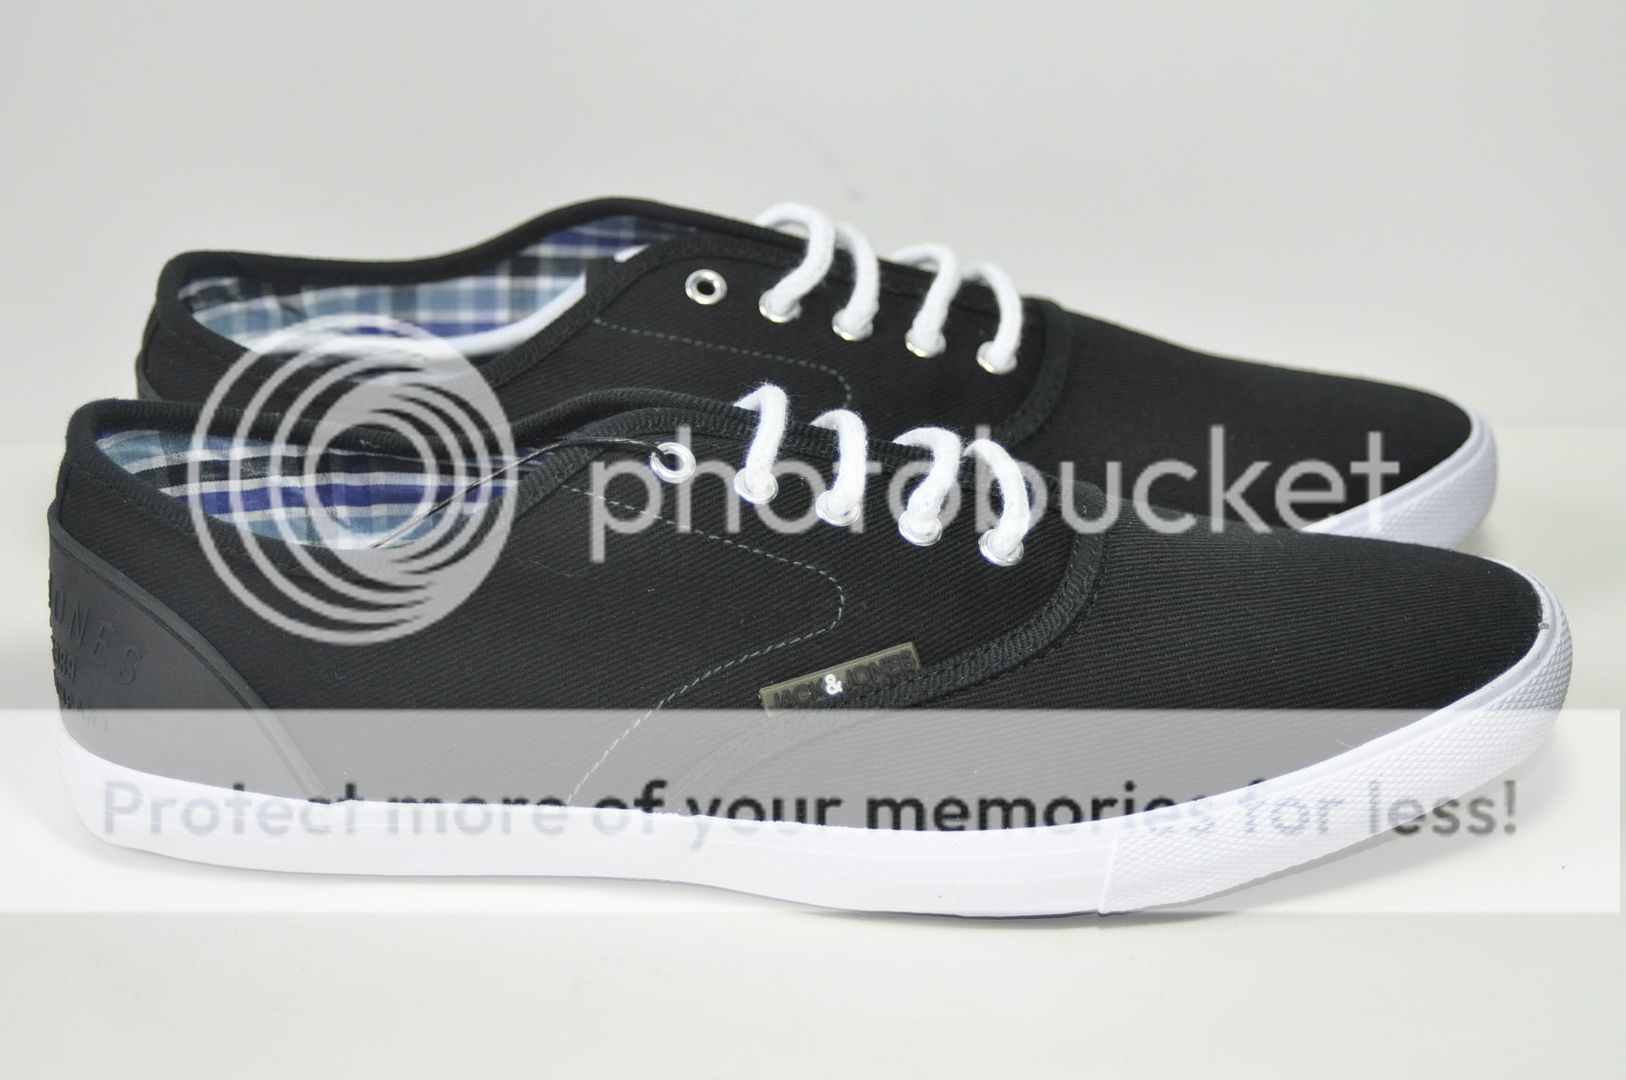 Spider Schuhe Sneakers Black Style Number 12056847 schwarz 2012